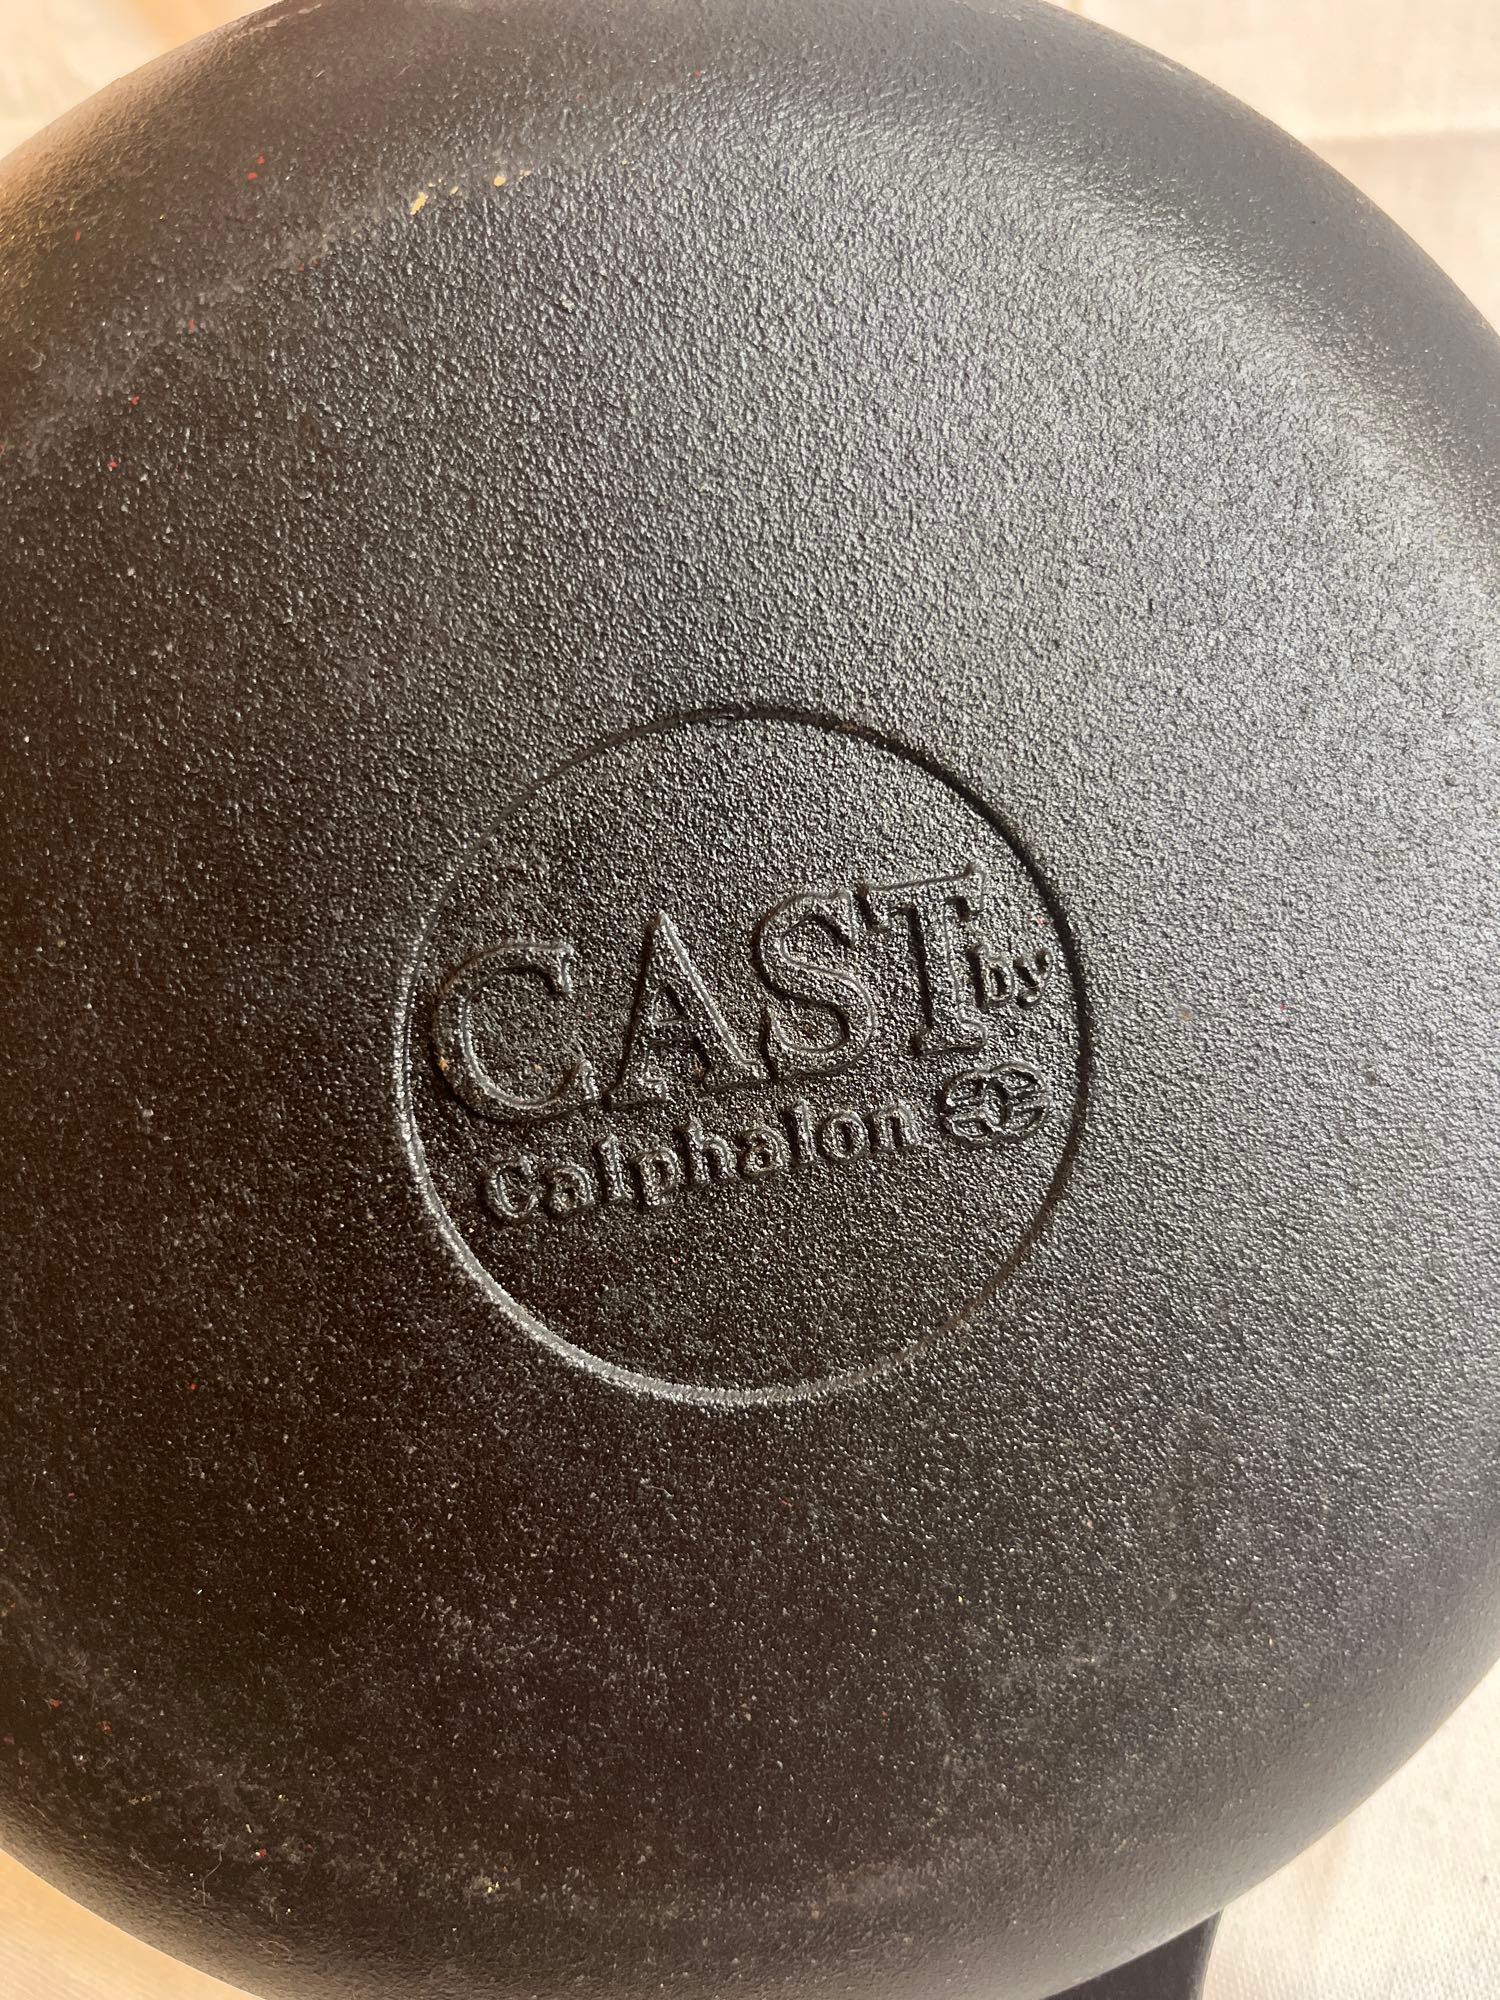 Two cast iron pans. Cast by Calphalon. 11".